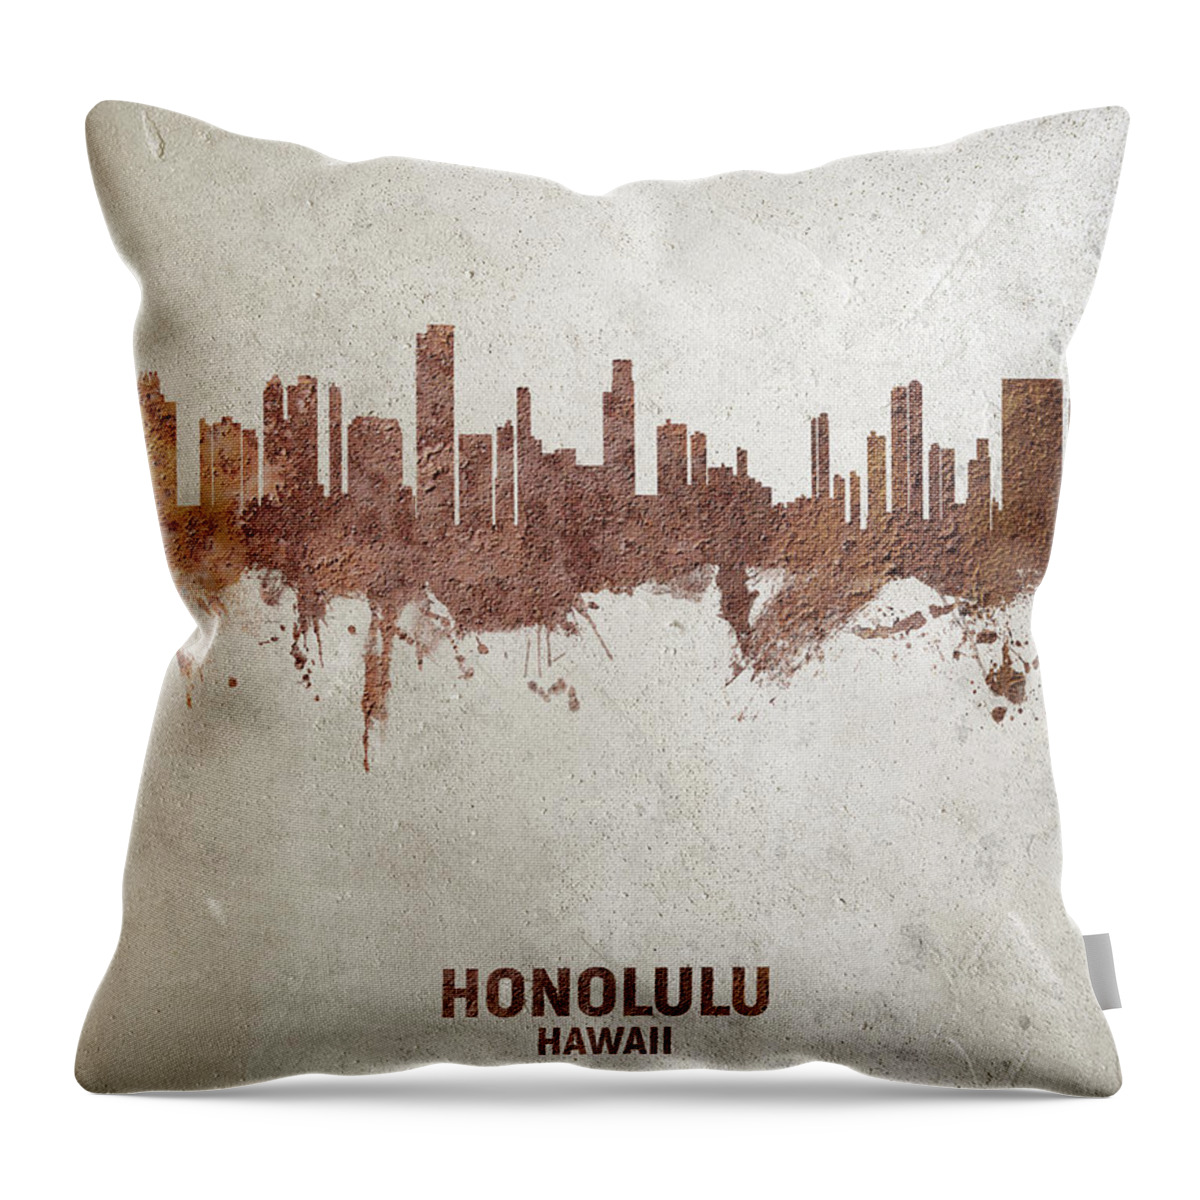 Honolulu Throw Pillow featuring the digital art Honolulu Hawaii Skyline #6 by Michael Tompsett